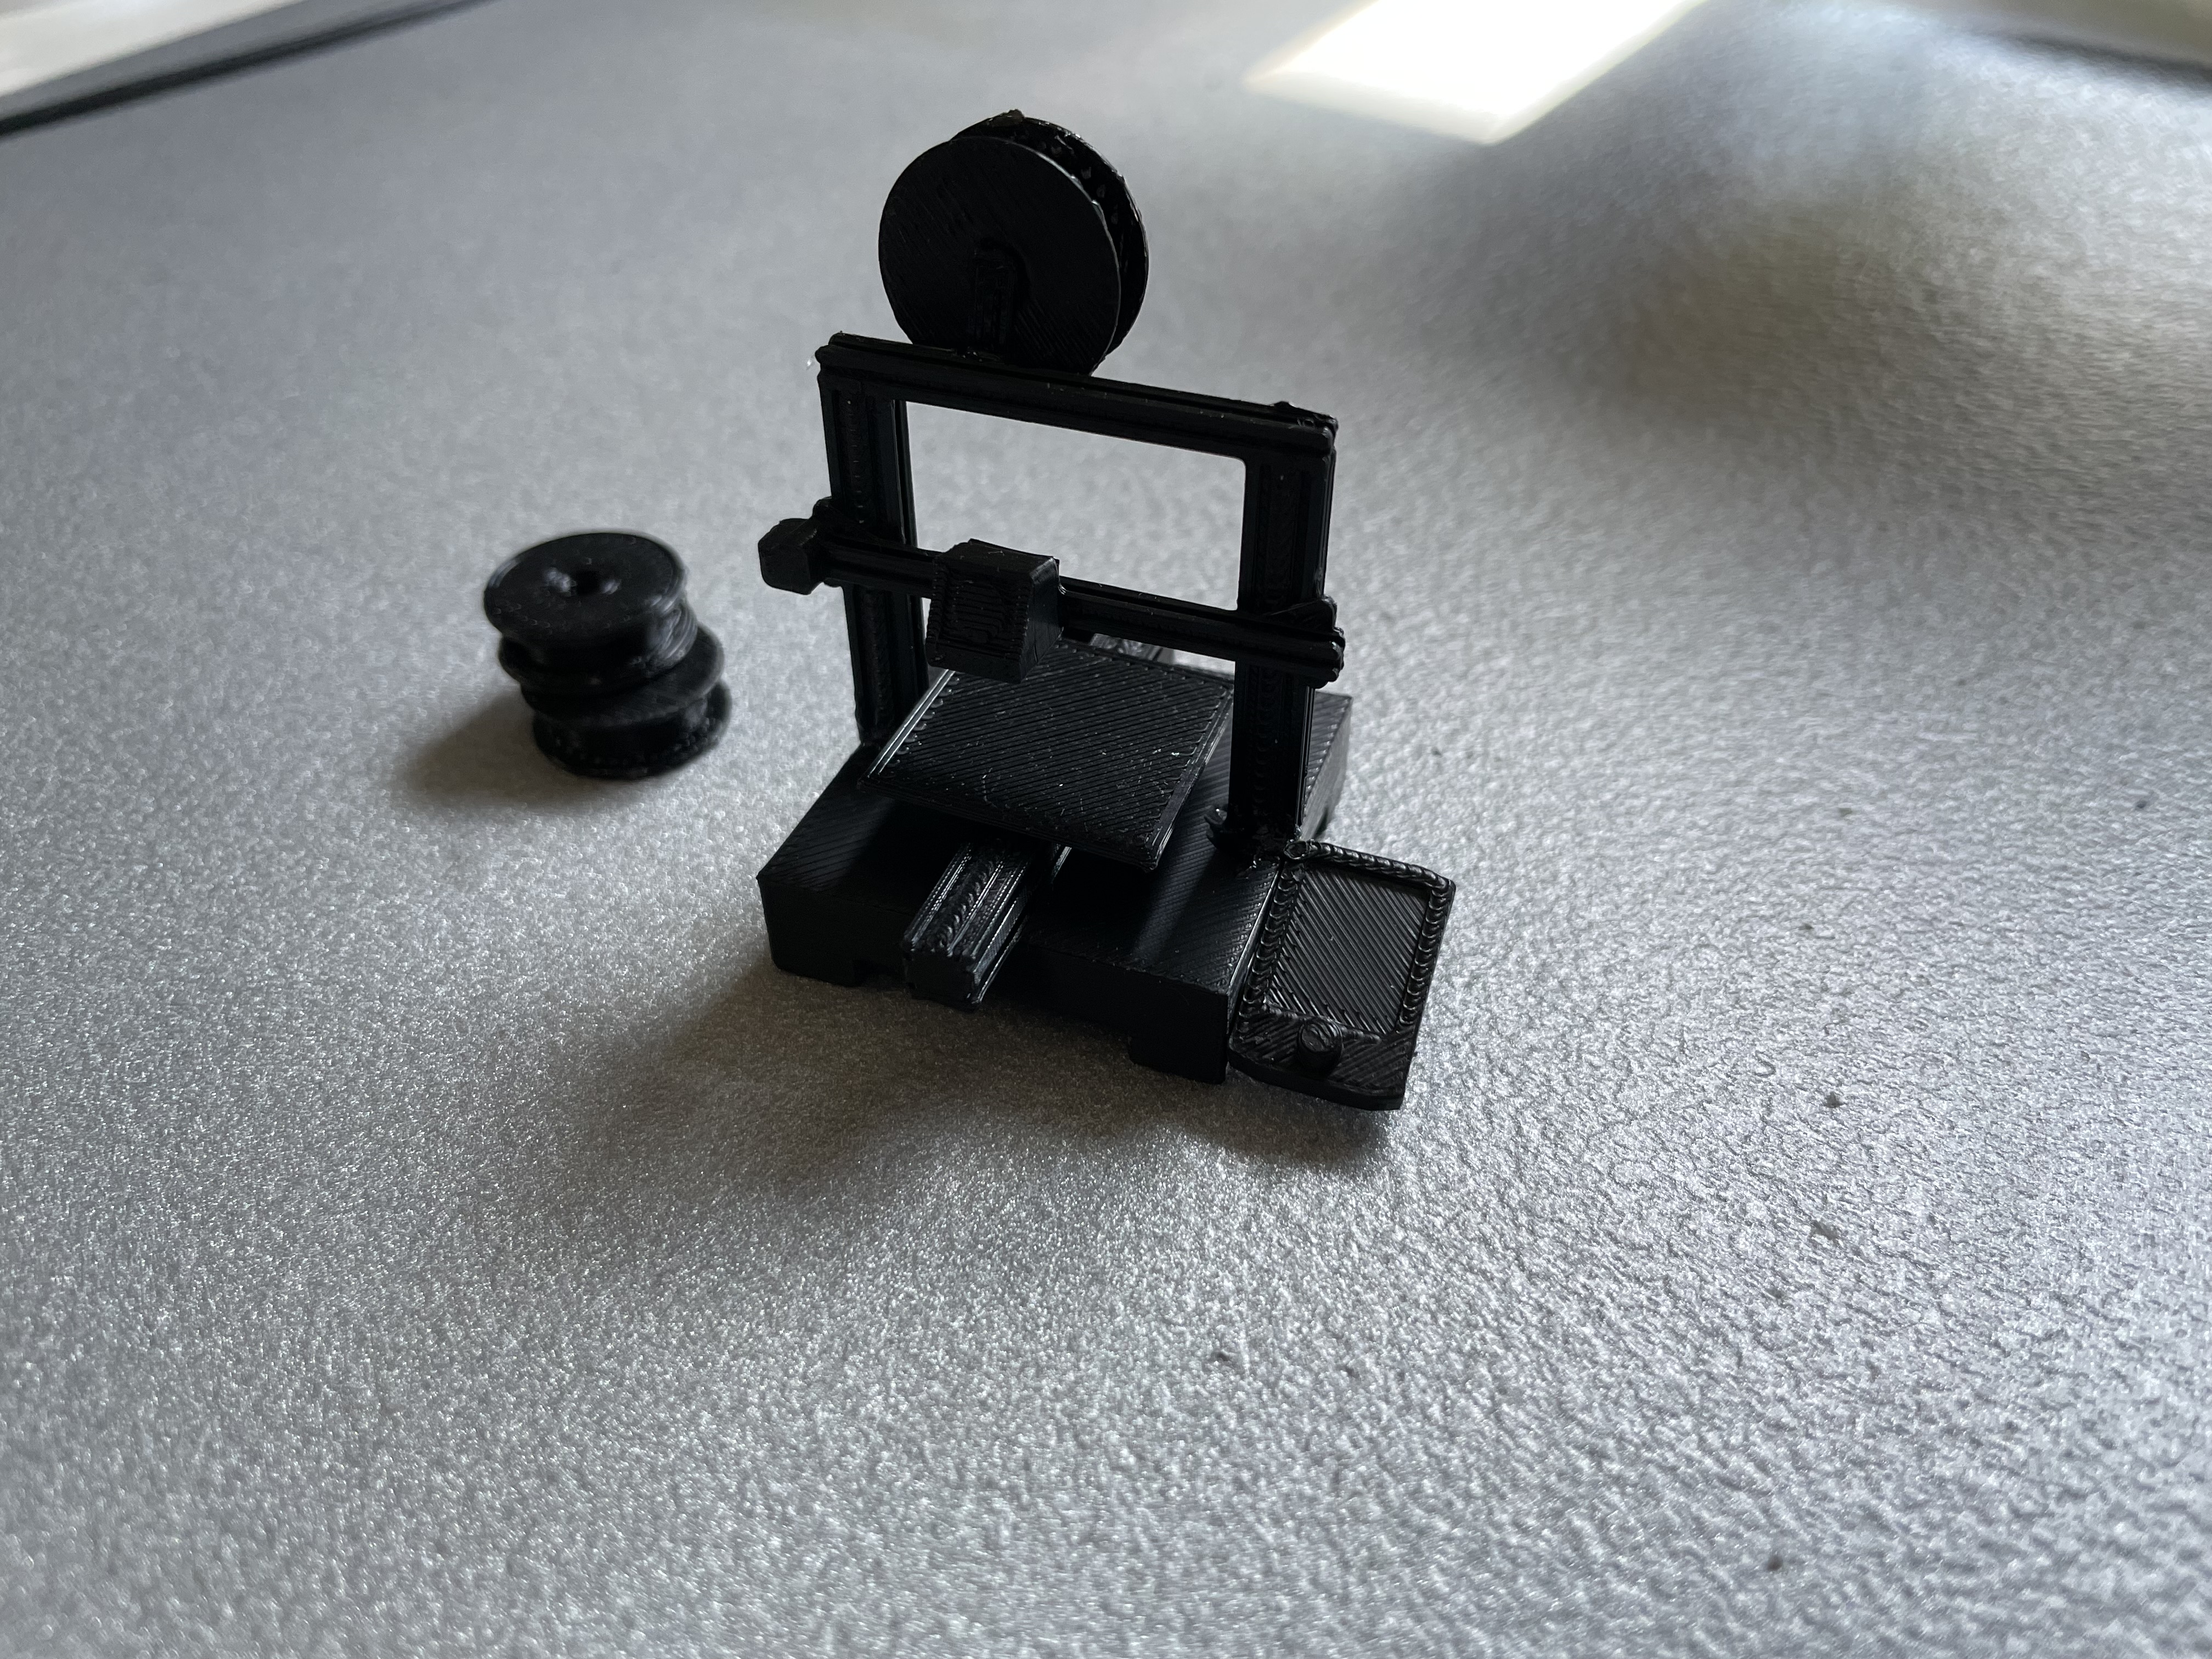 3D Printer as mini model